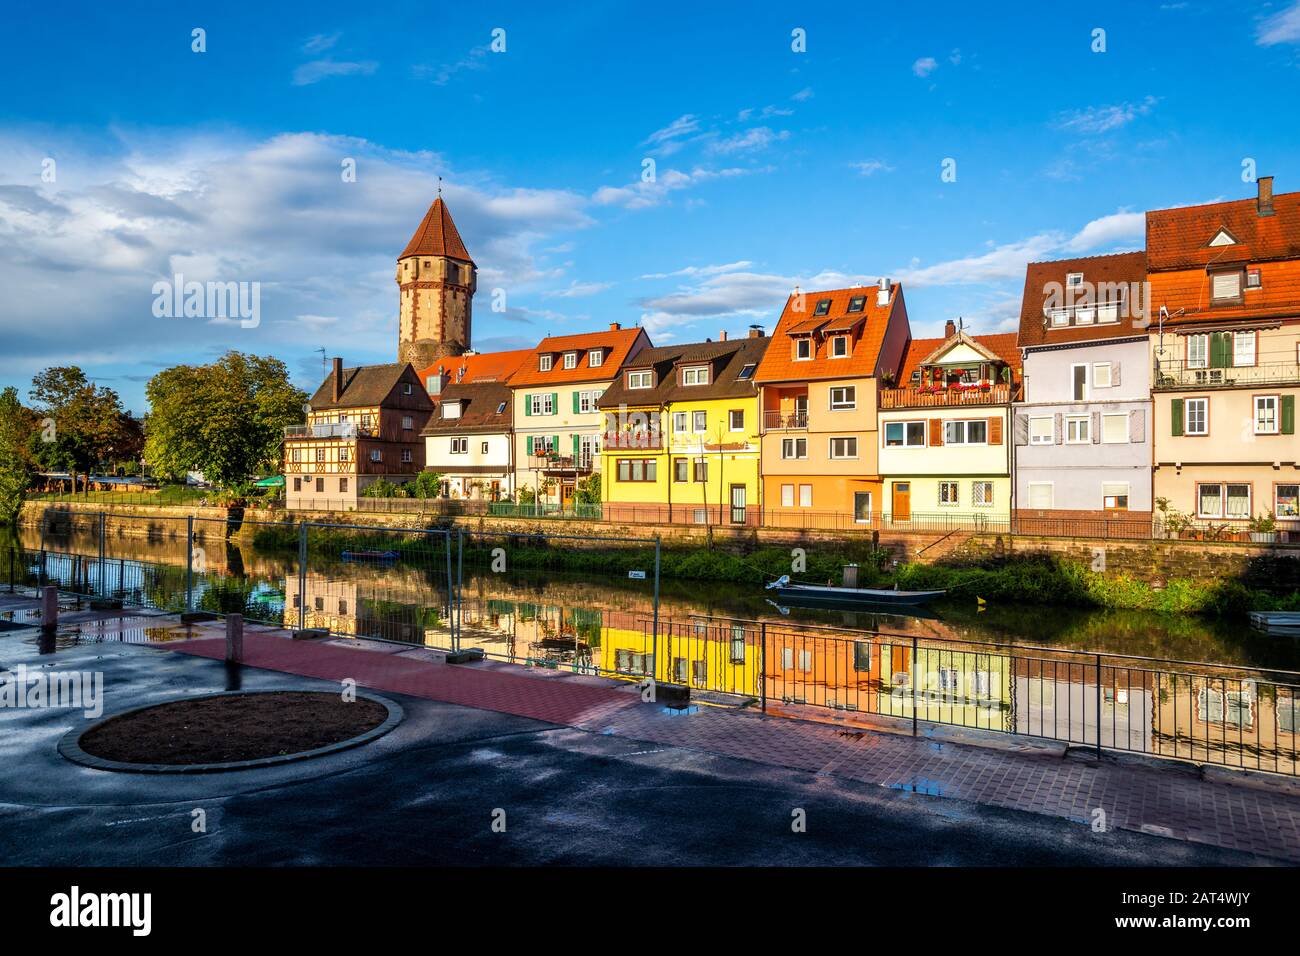 Historical city of Wertheim, Germany Stock Photo